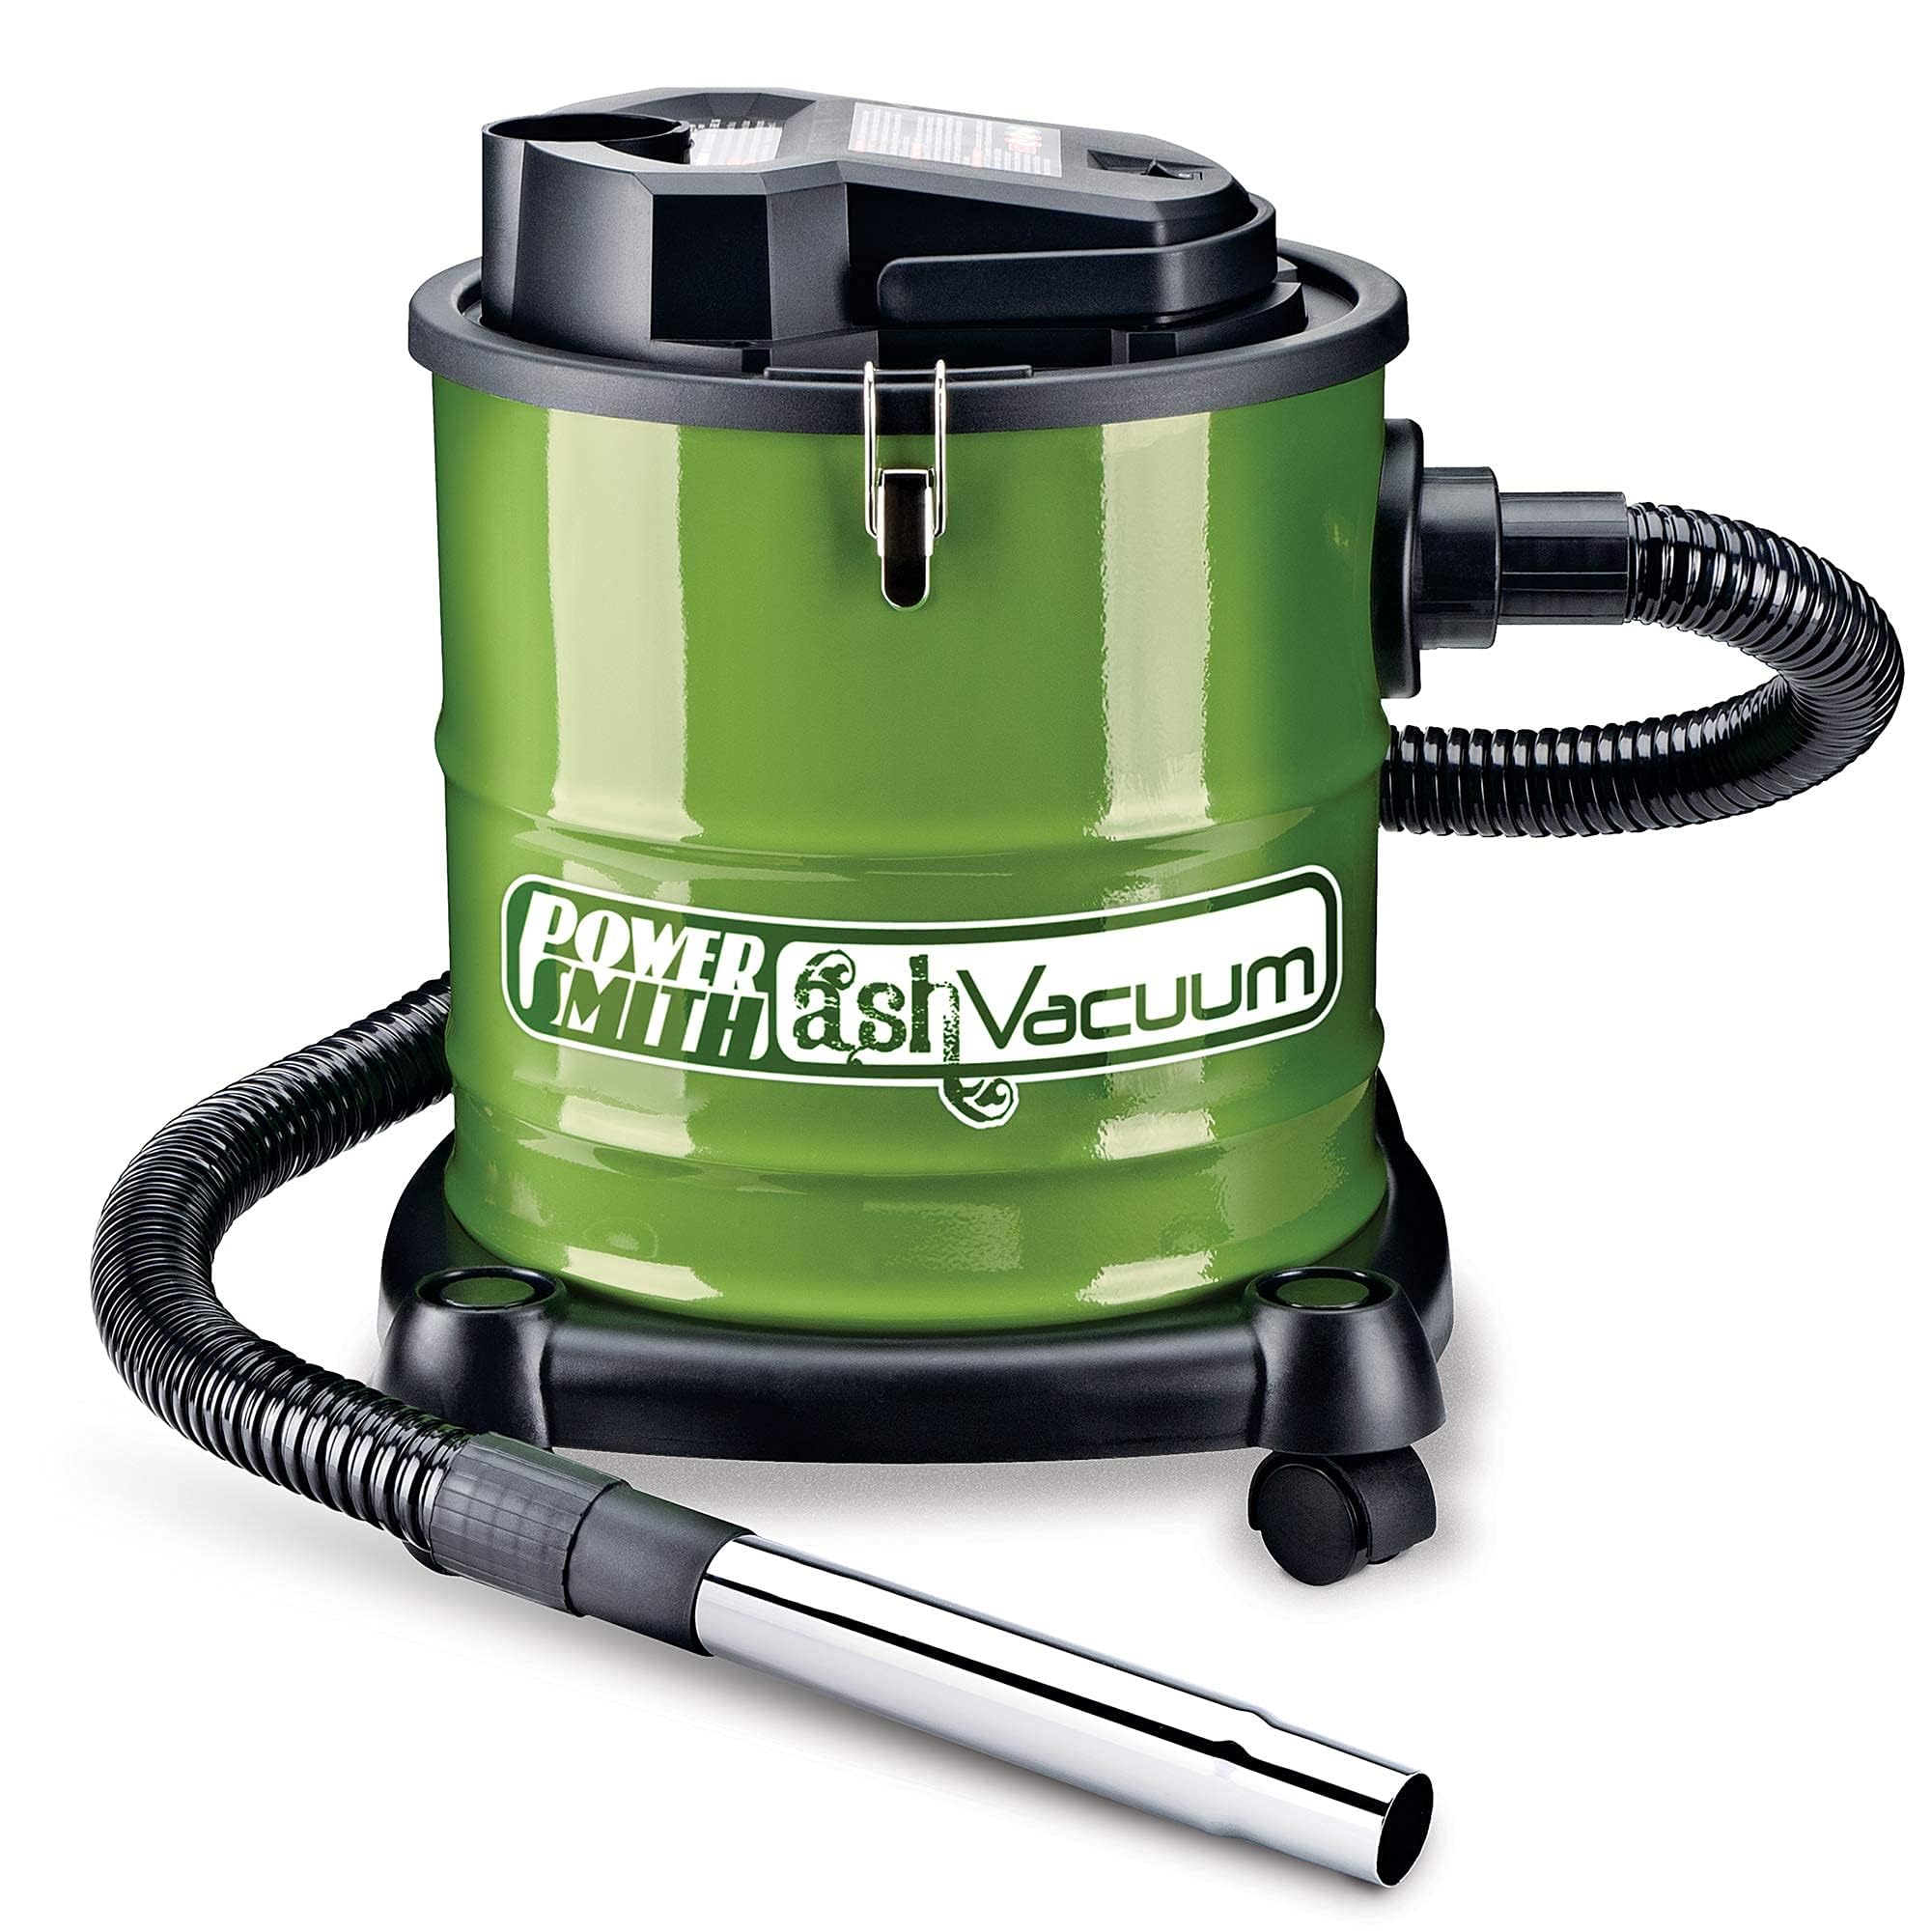 PowerSmith PAVC101 10 Amp Ash Vacuum